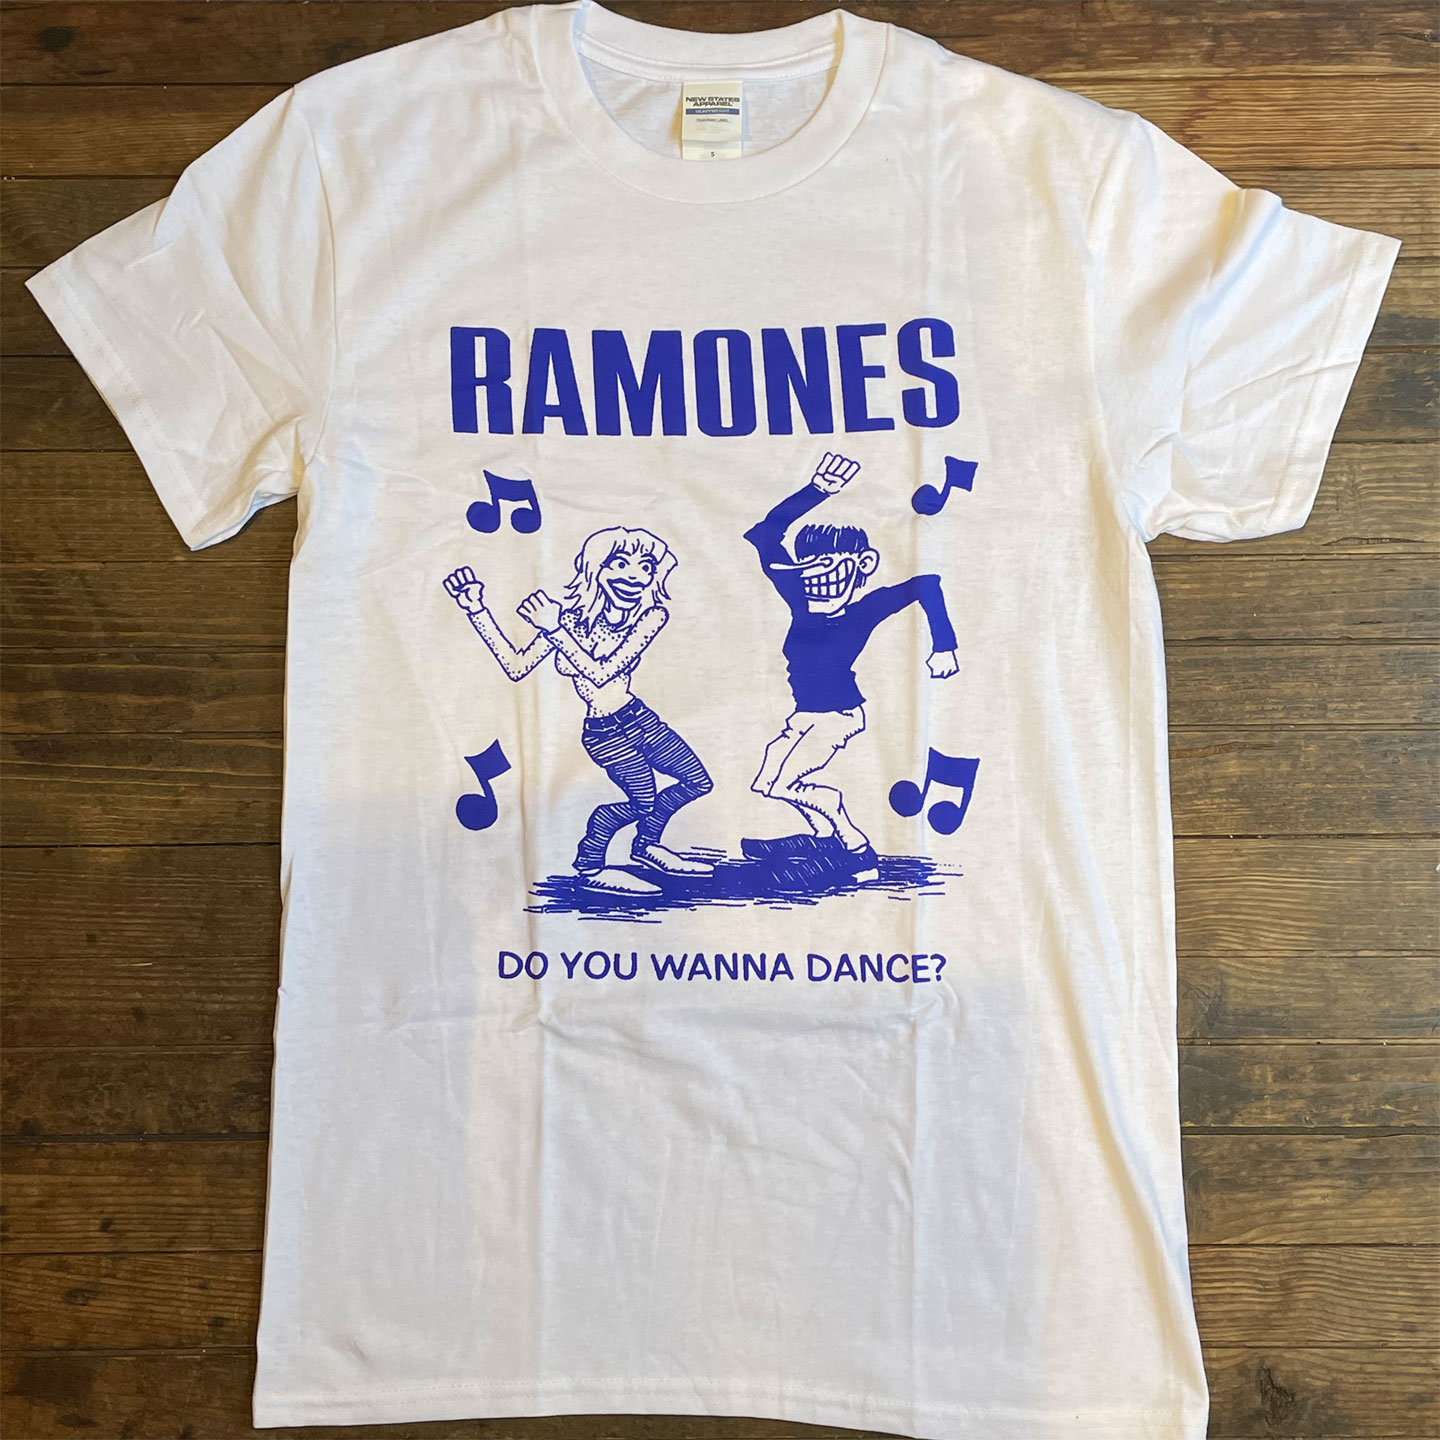 RAMONES Tシャツ DO YOU WANNADANCE?